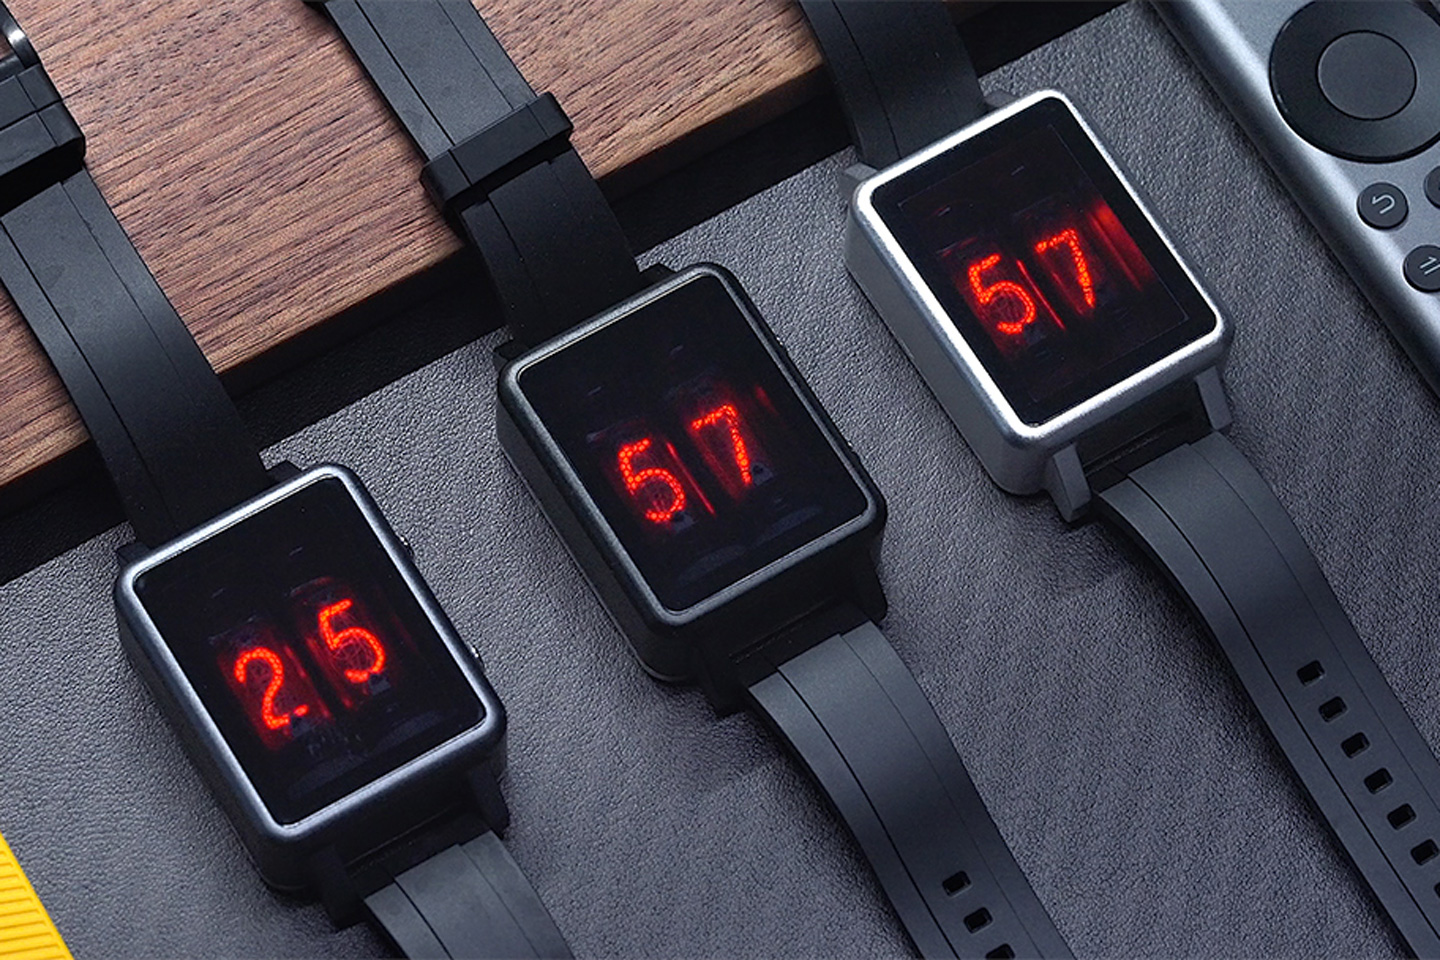 #This retro-punk Nixie wristwatch actually uses authentic nixie tubes to tell the time